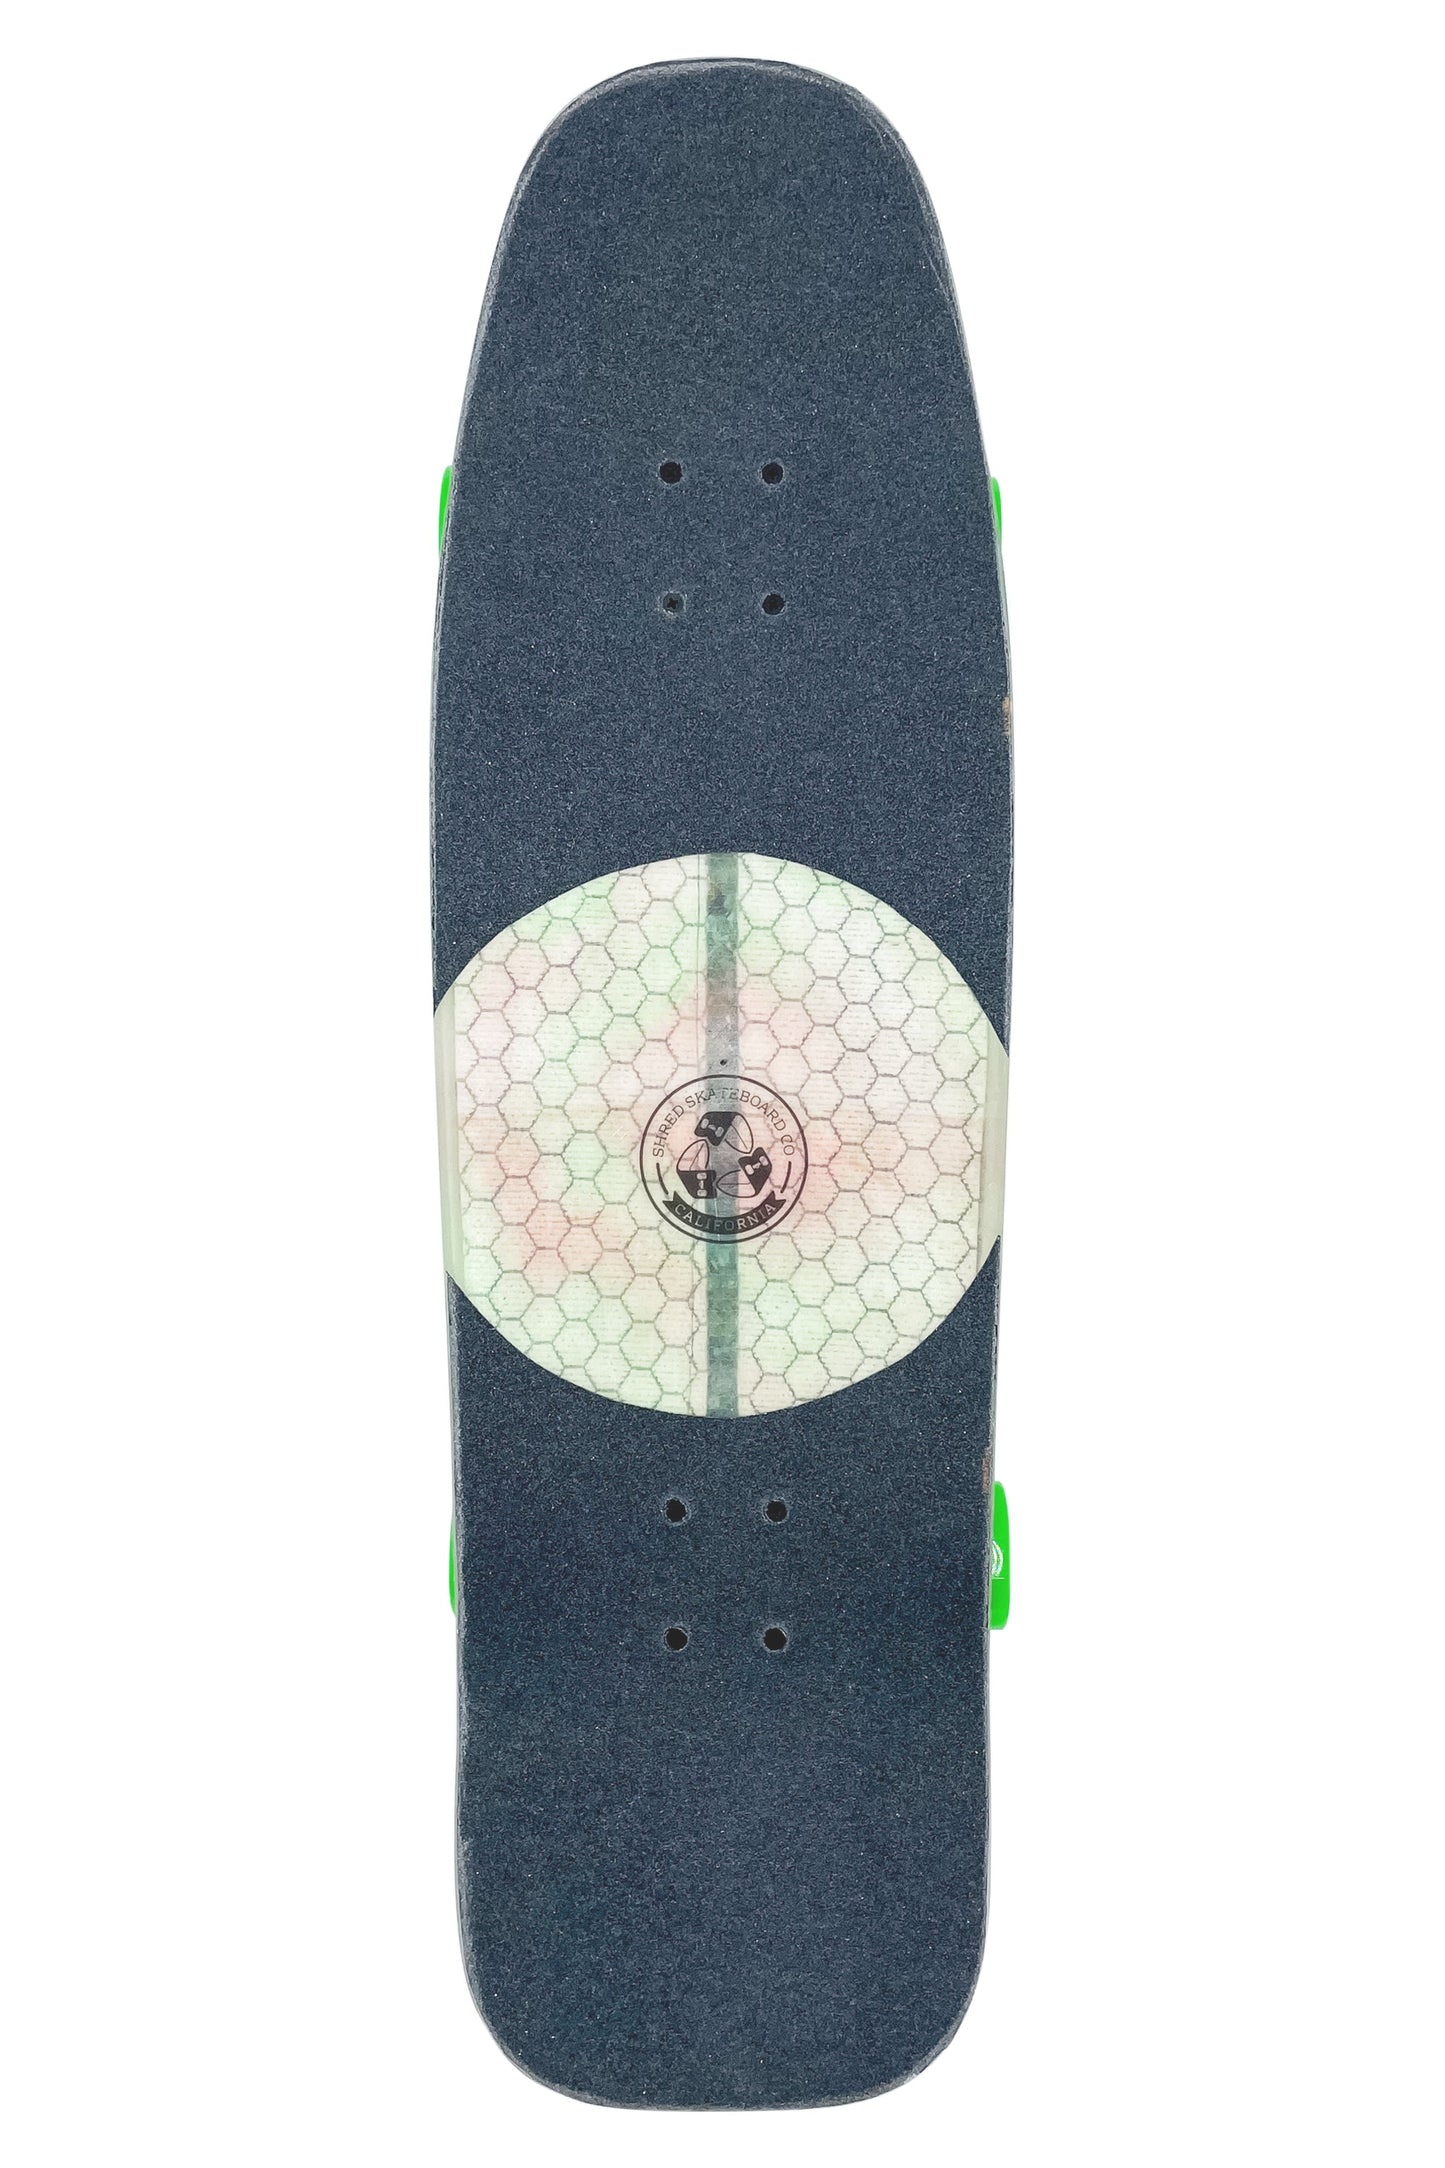 
                  
                    Street Cruiser - The Pool Shark (32") - Pink & Green Tie Dye by Shred Skateboard Co
                  
                